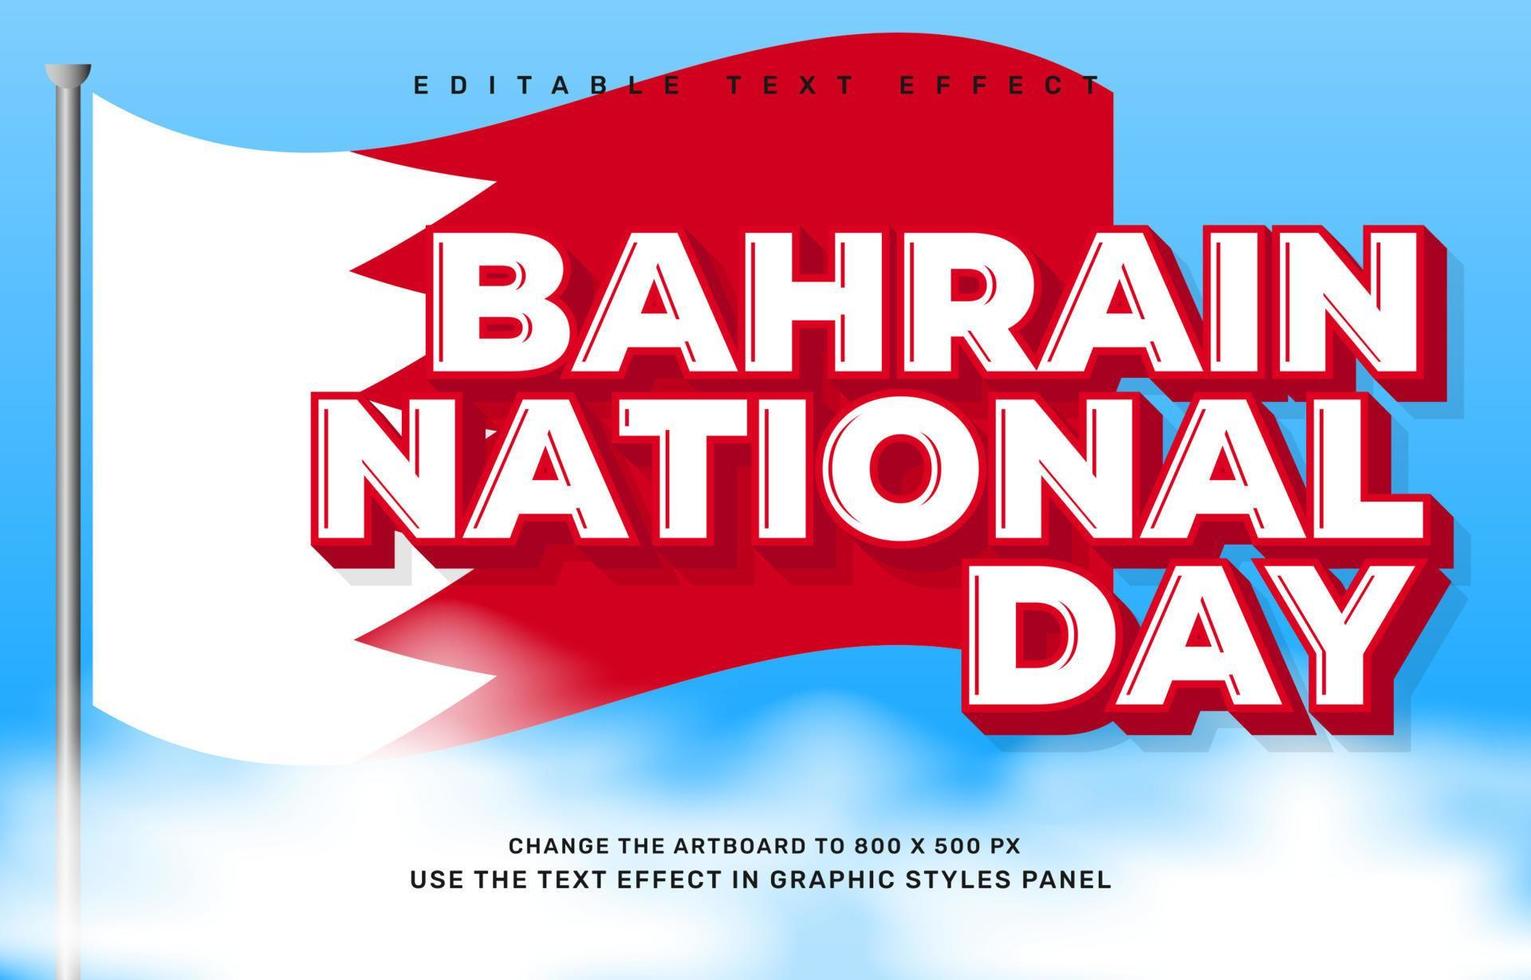 plantilla de efecto de texto editable del día nacional de bahrein vector